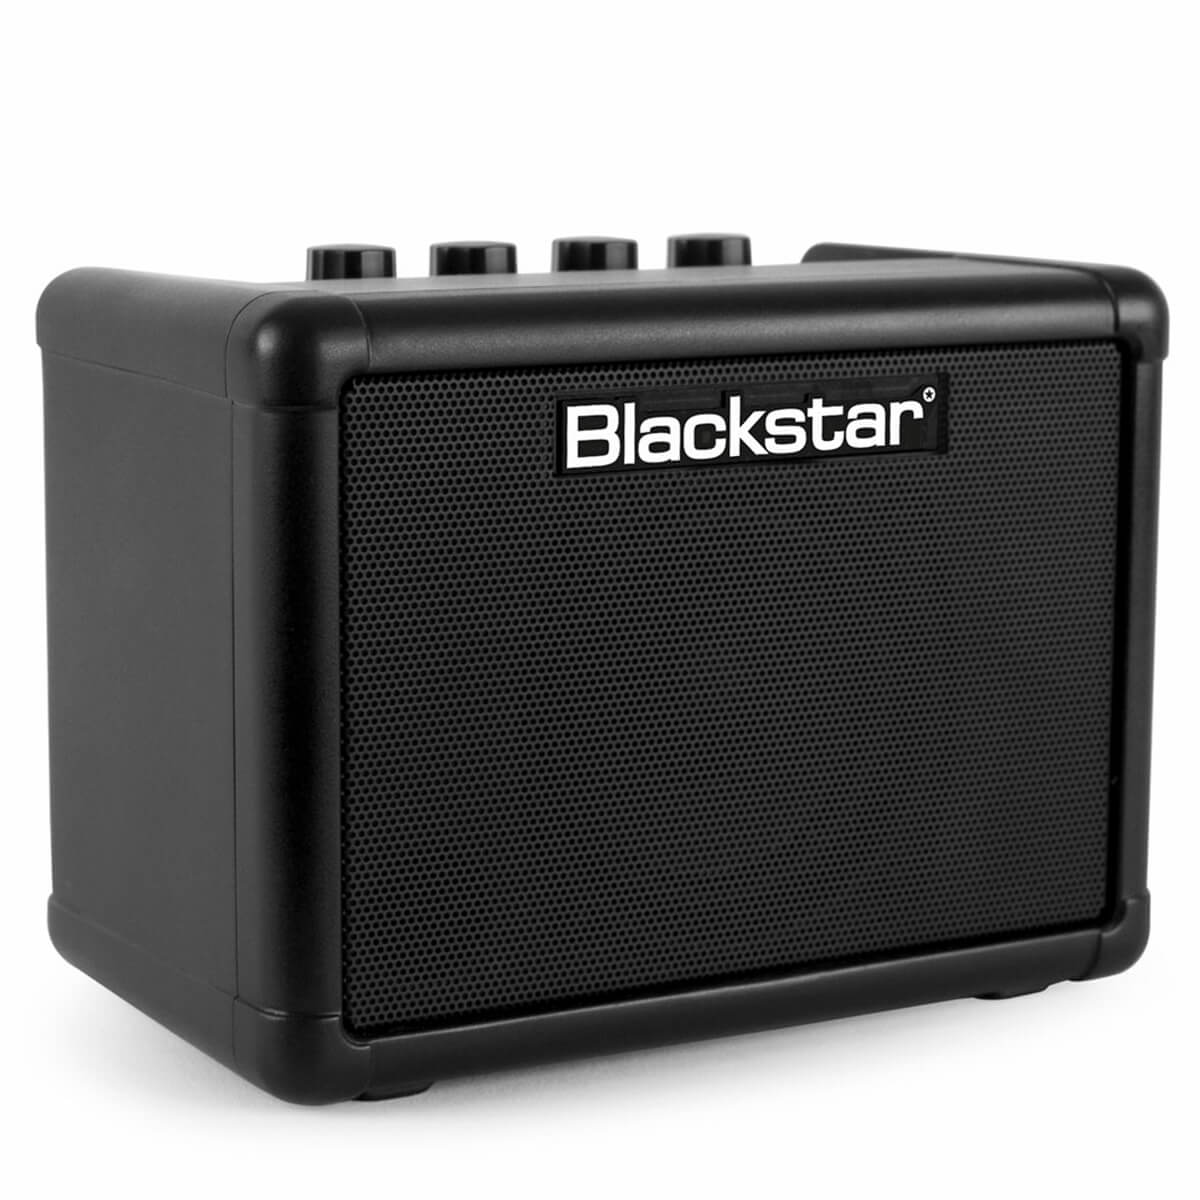 Blackstar Amps FLY 3 mini guitar amplifier right